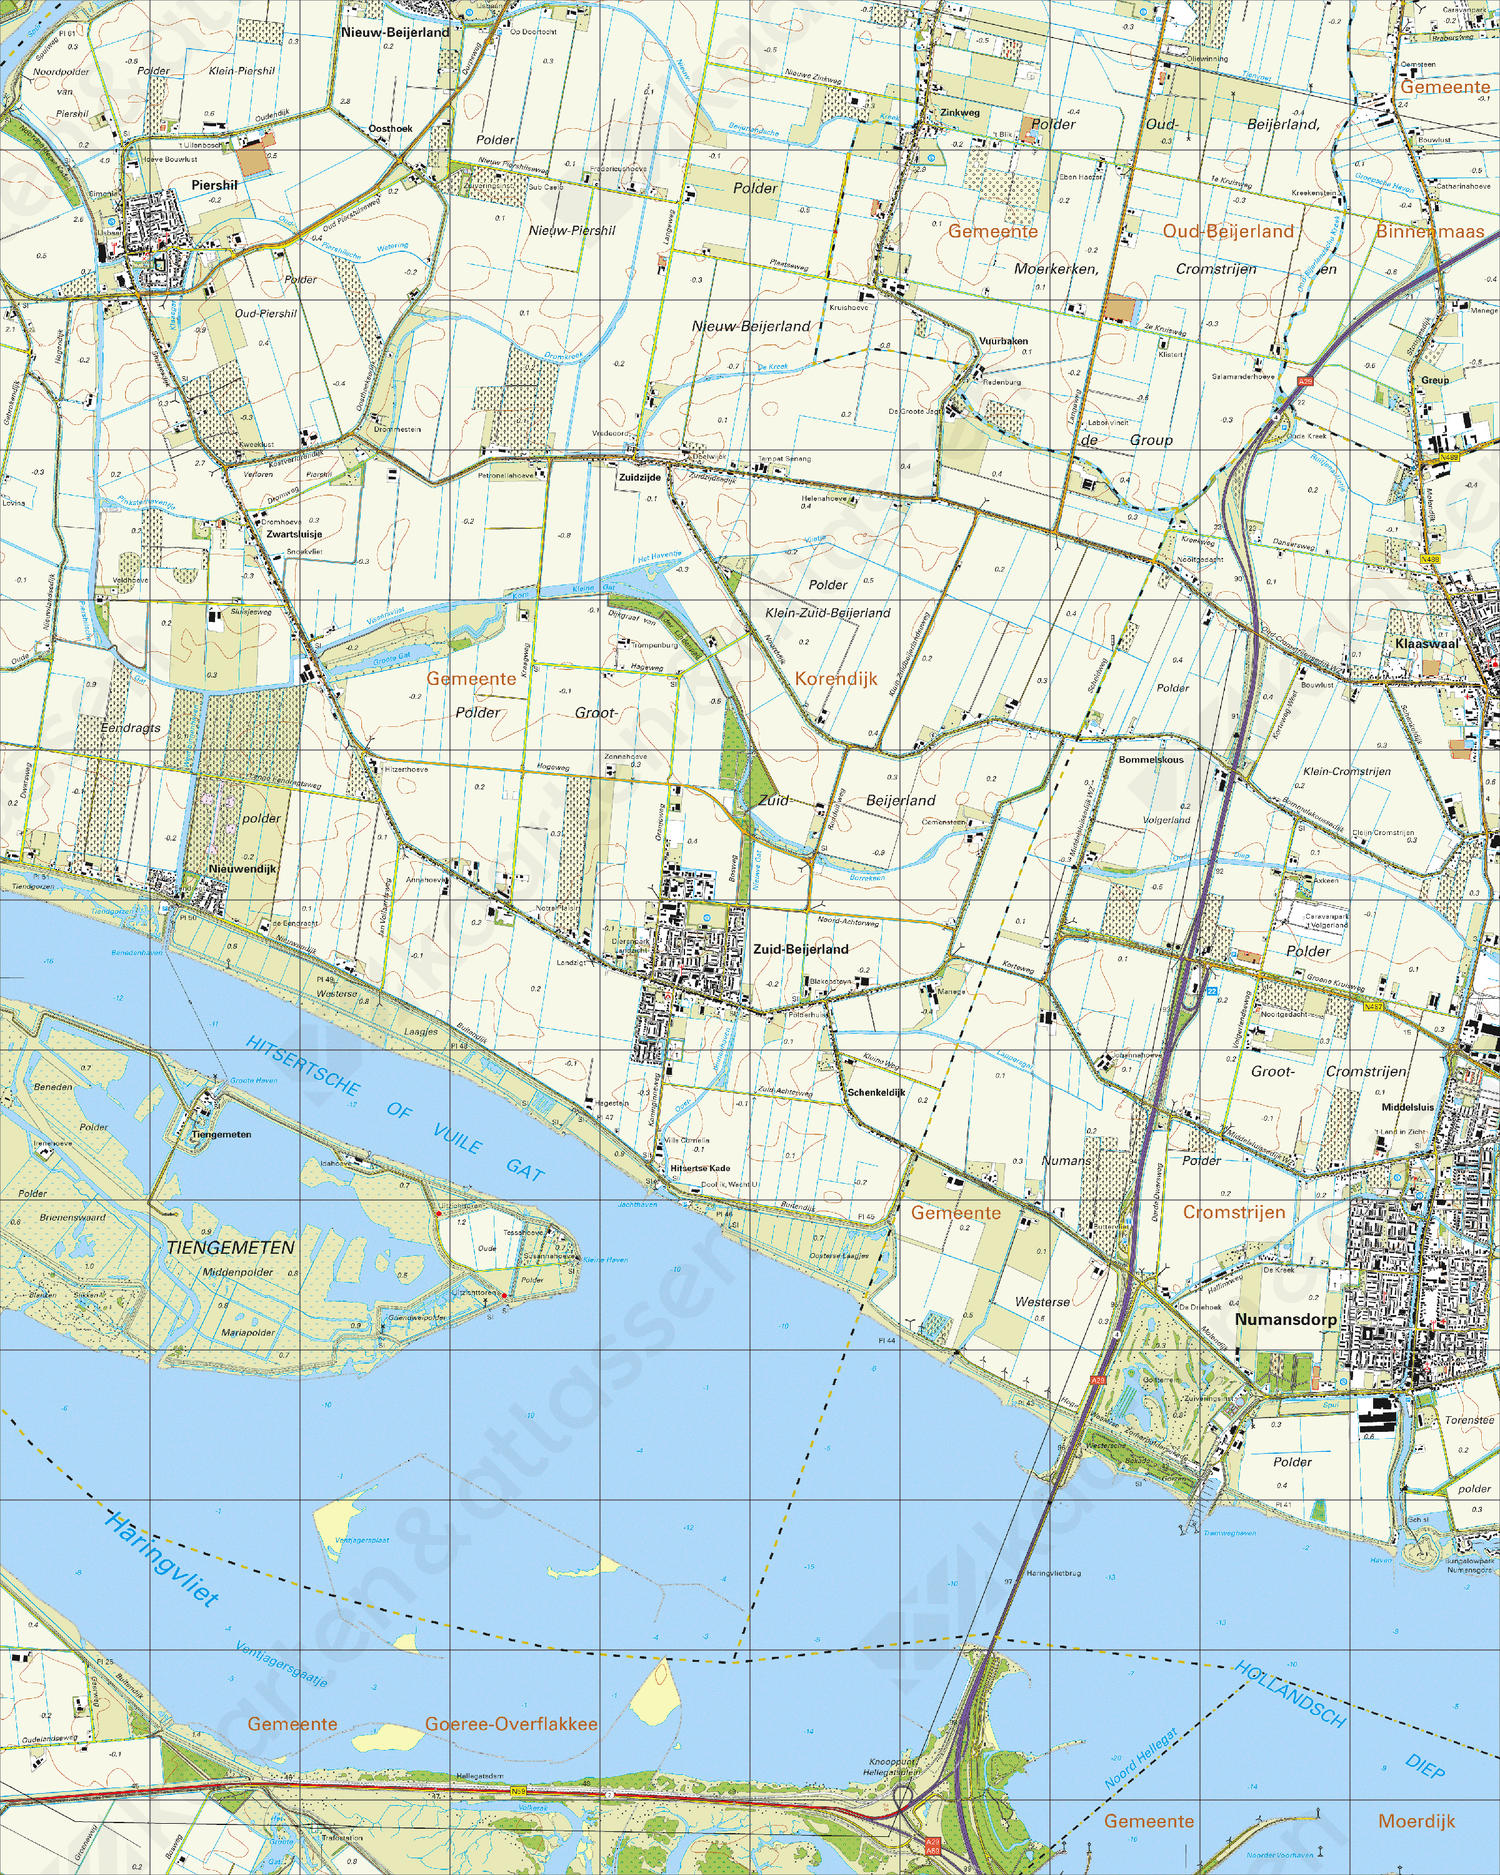 Digitale Topografische Kaart 43E Numansdorp